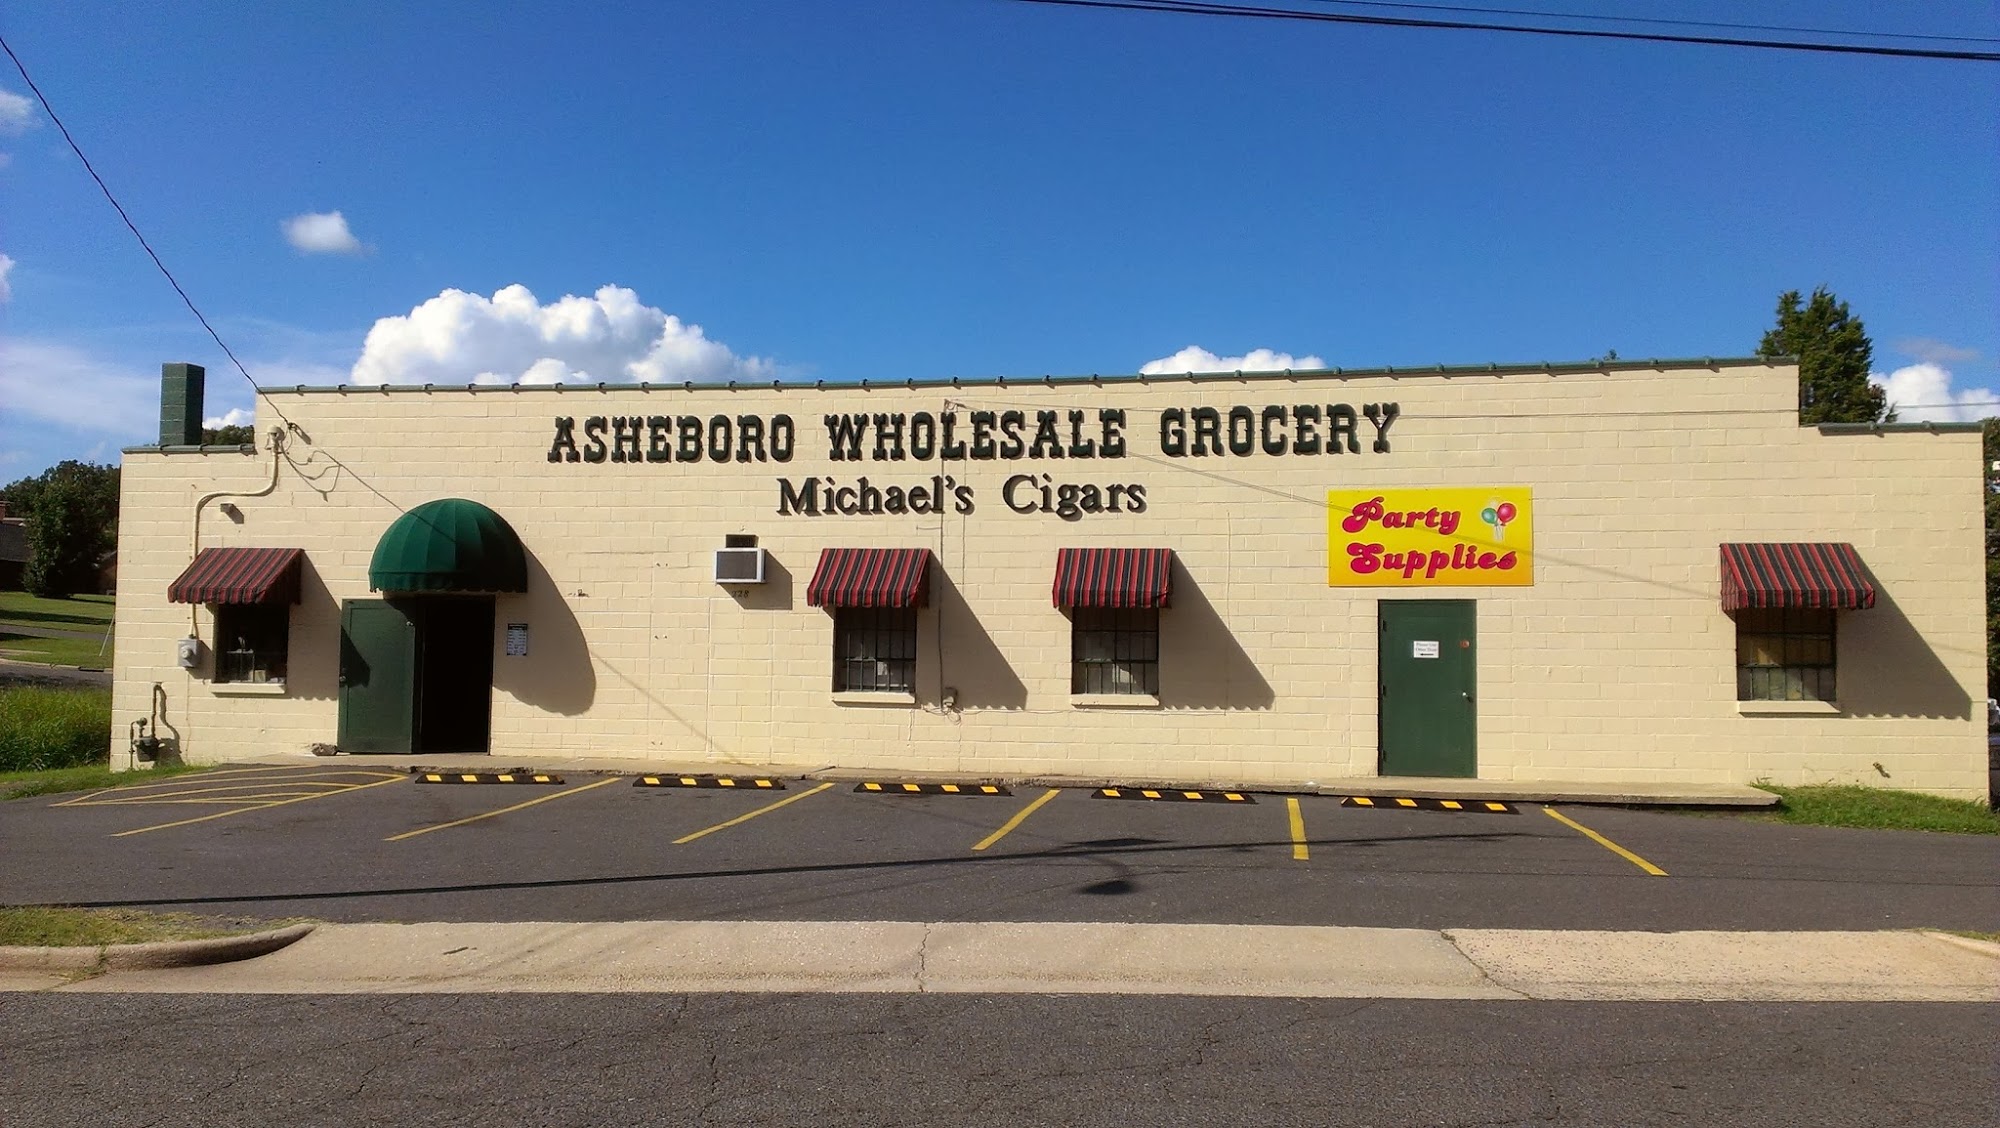 Asheboro Wholesale Grocery Inc / Michael's Cigars